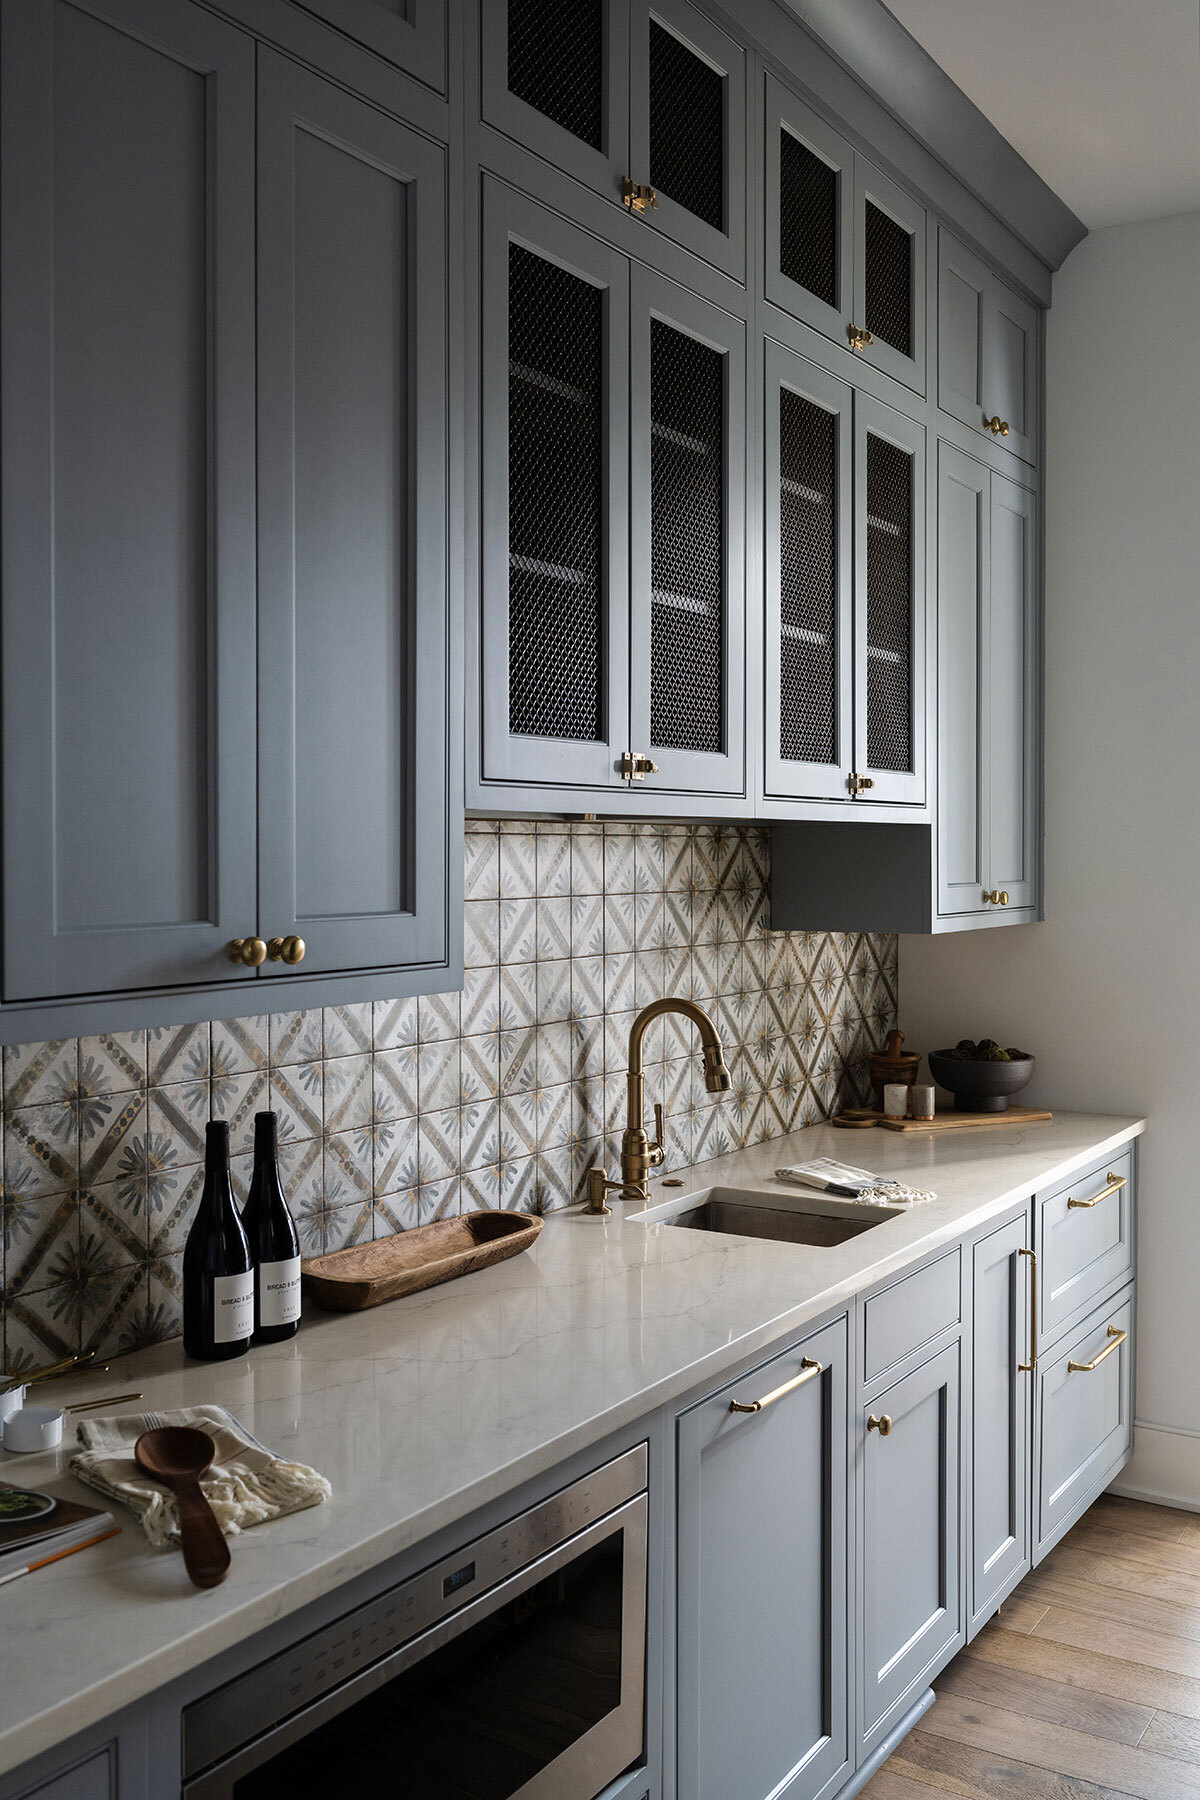 Edgewood butler's pantry with beautiful pattern tile backsplash